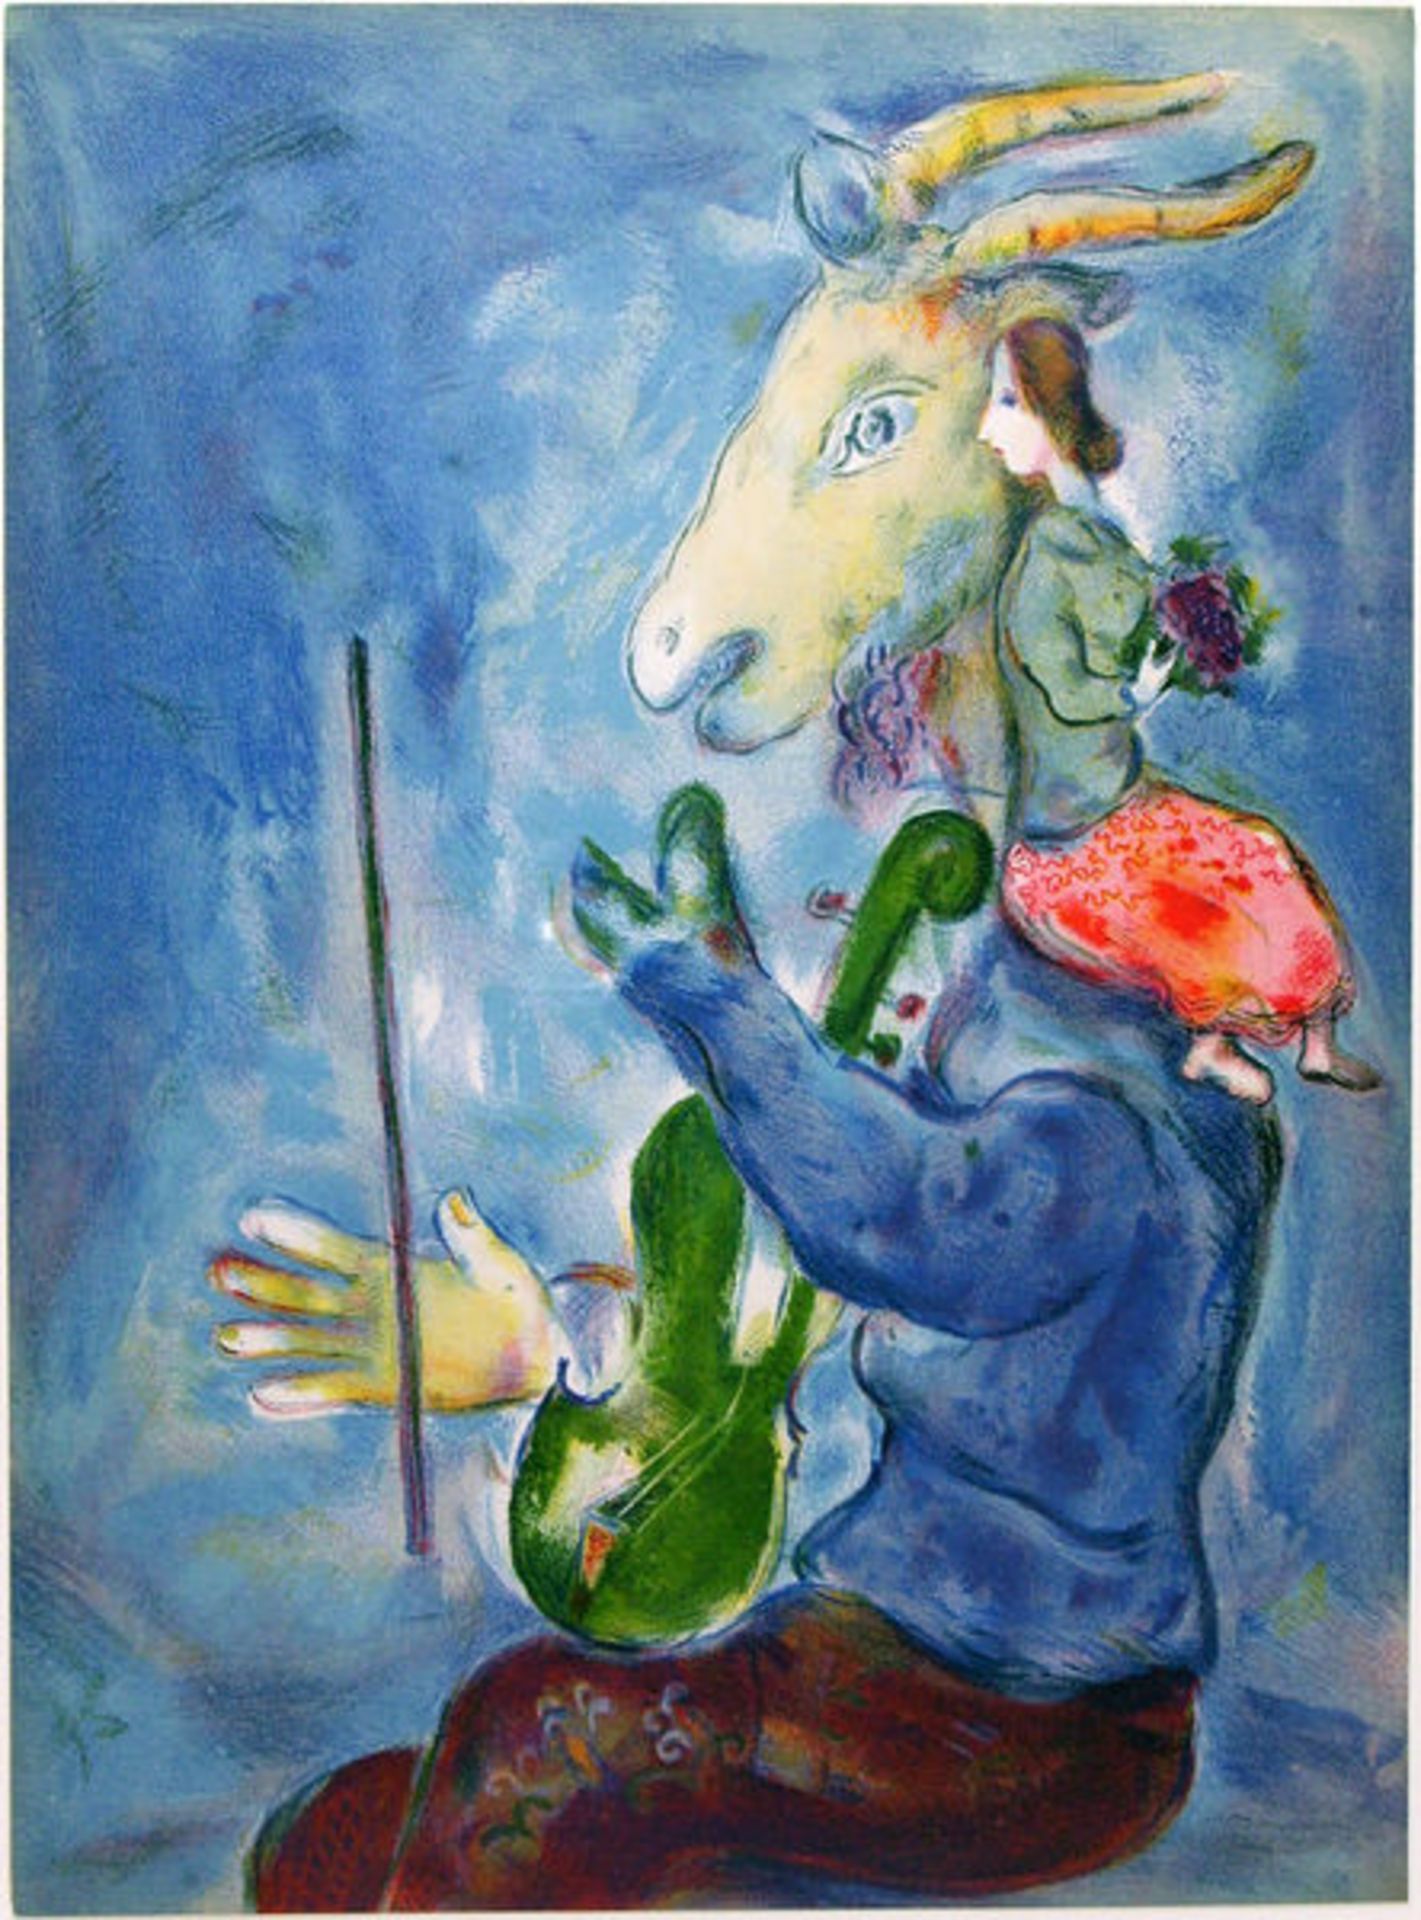 Chagall, Marc
Farblithographie auf Velin, 35,5 × 26,0 cm.
Printemps (1938)Blatt aus der 1938